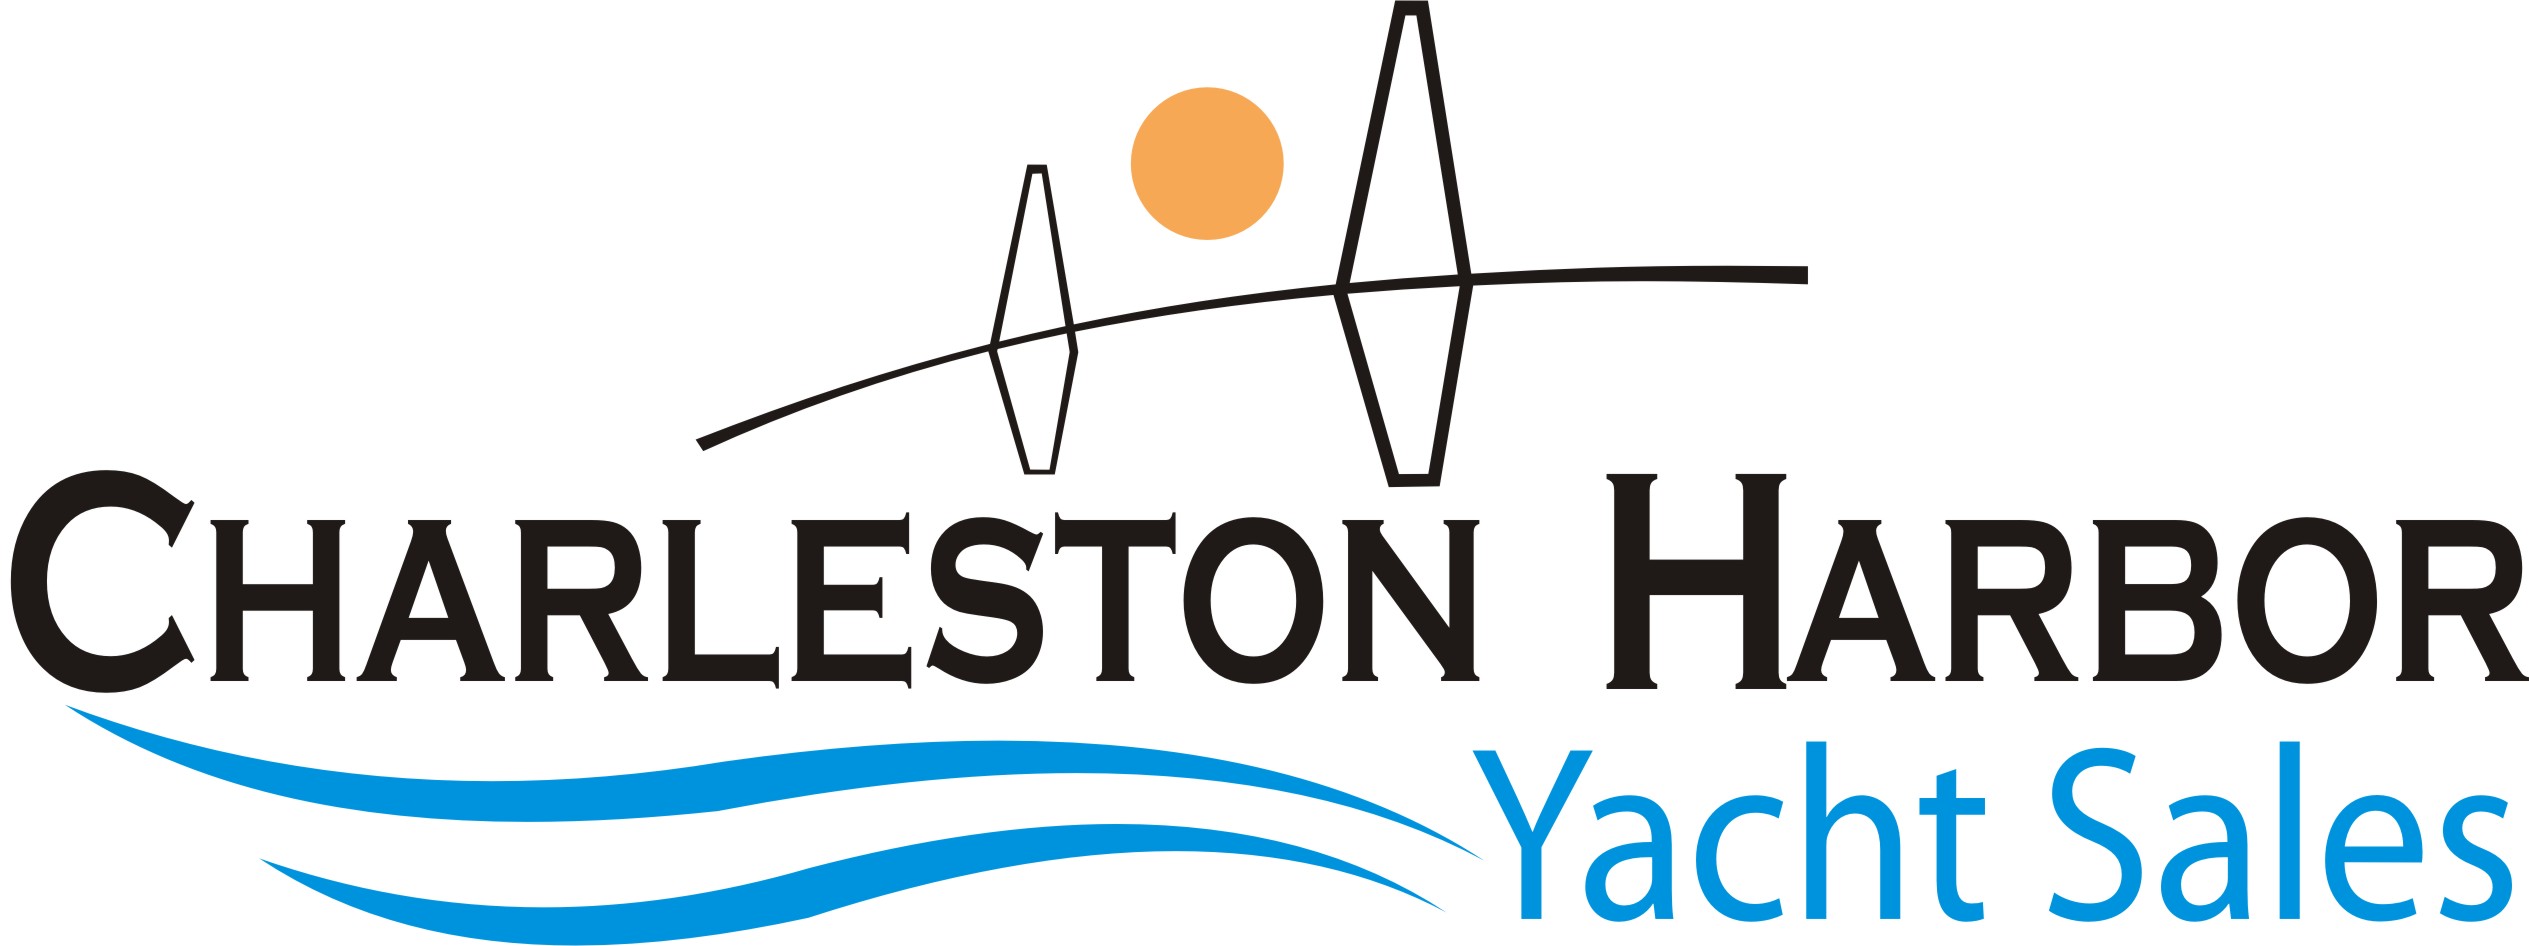 charleston harbor yacht sales